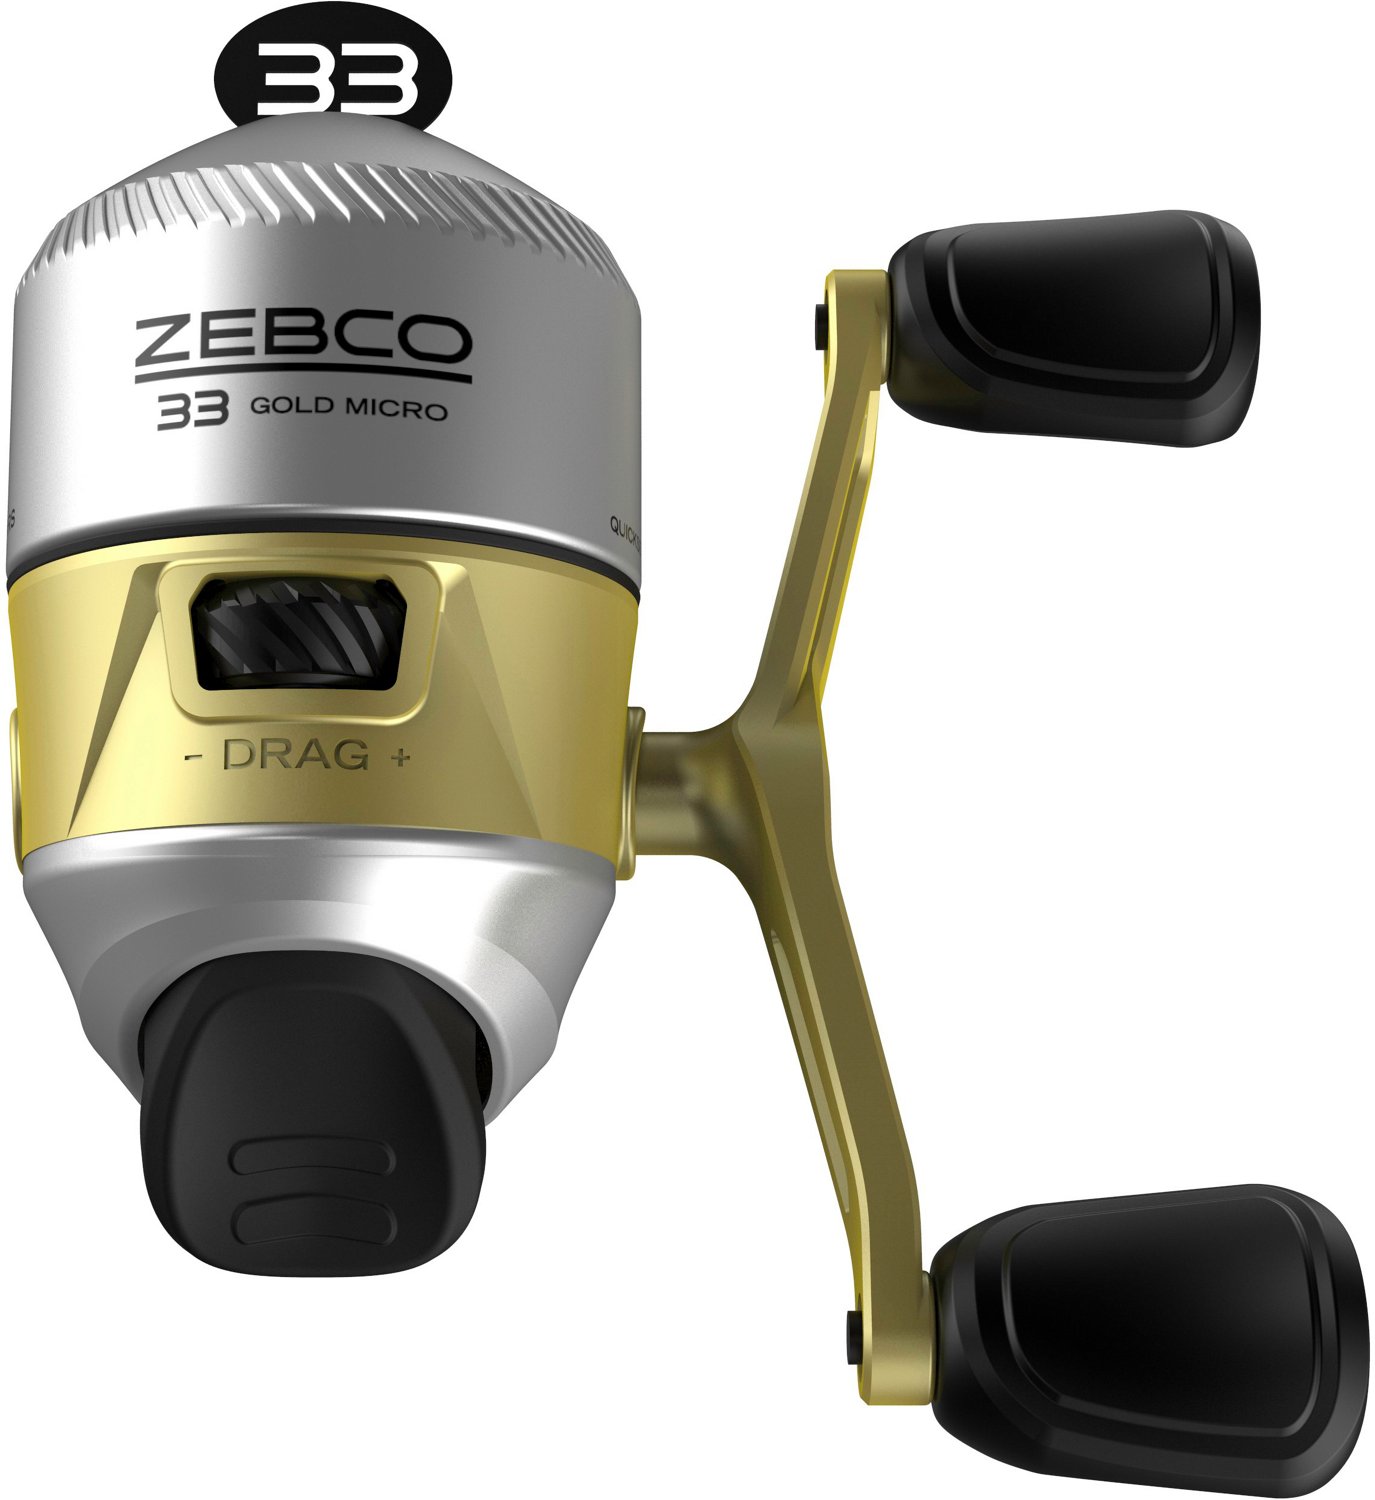 Zebco 33 Micro Gold Spincast Reel